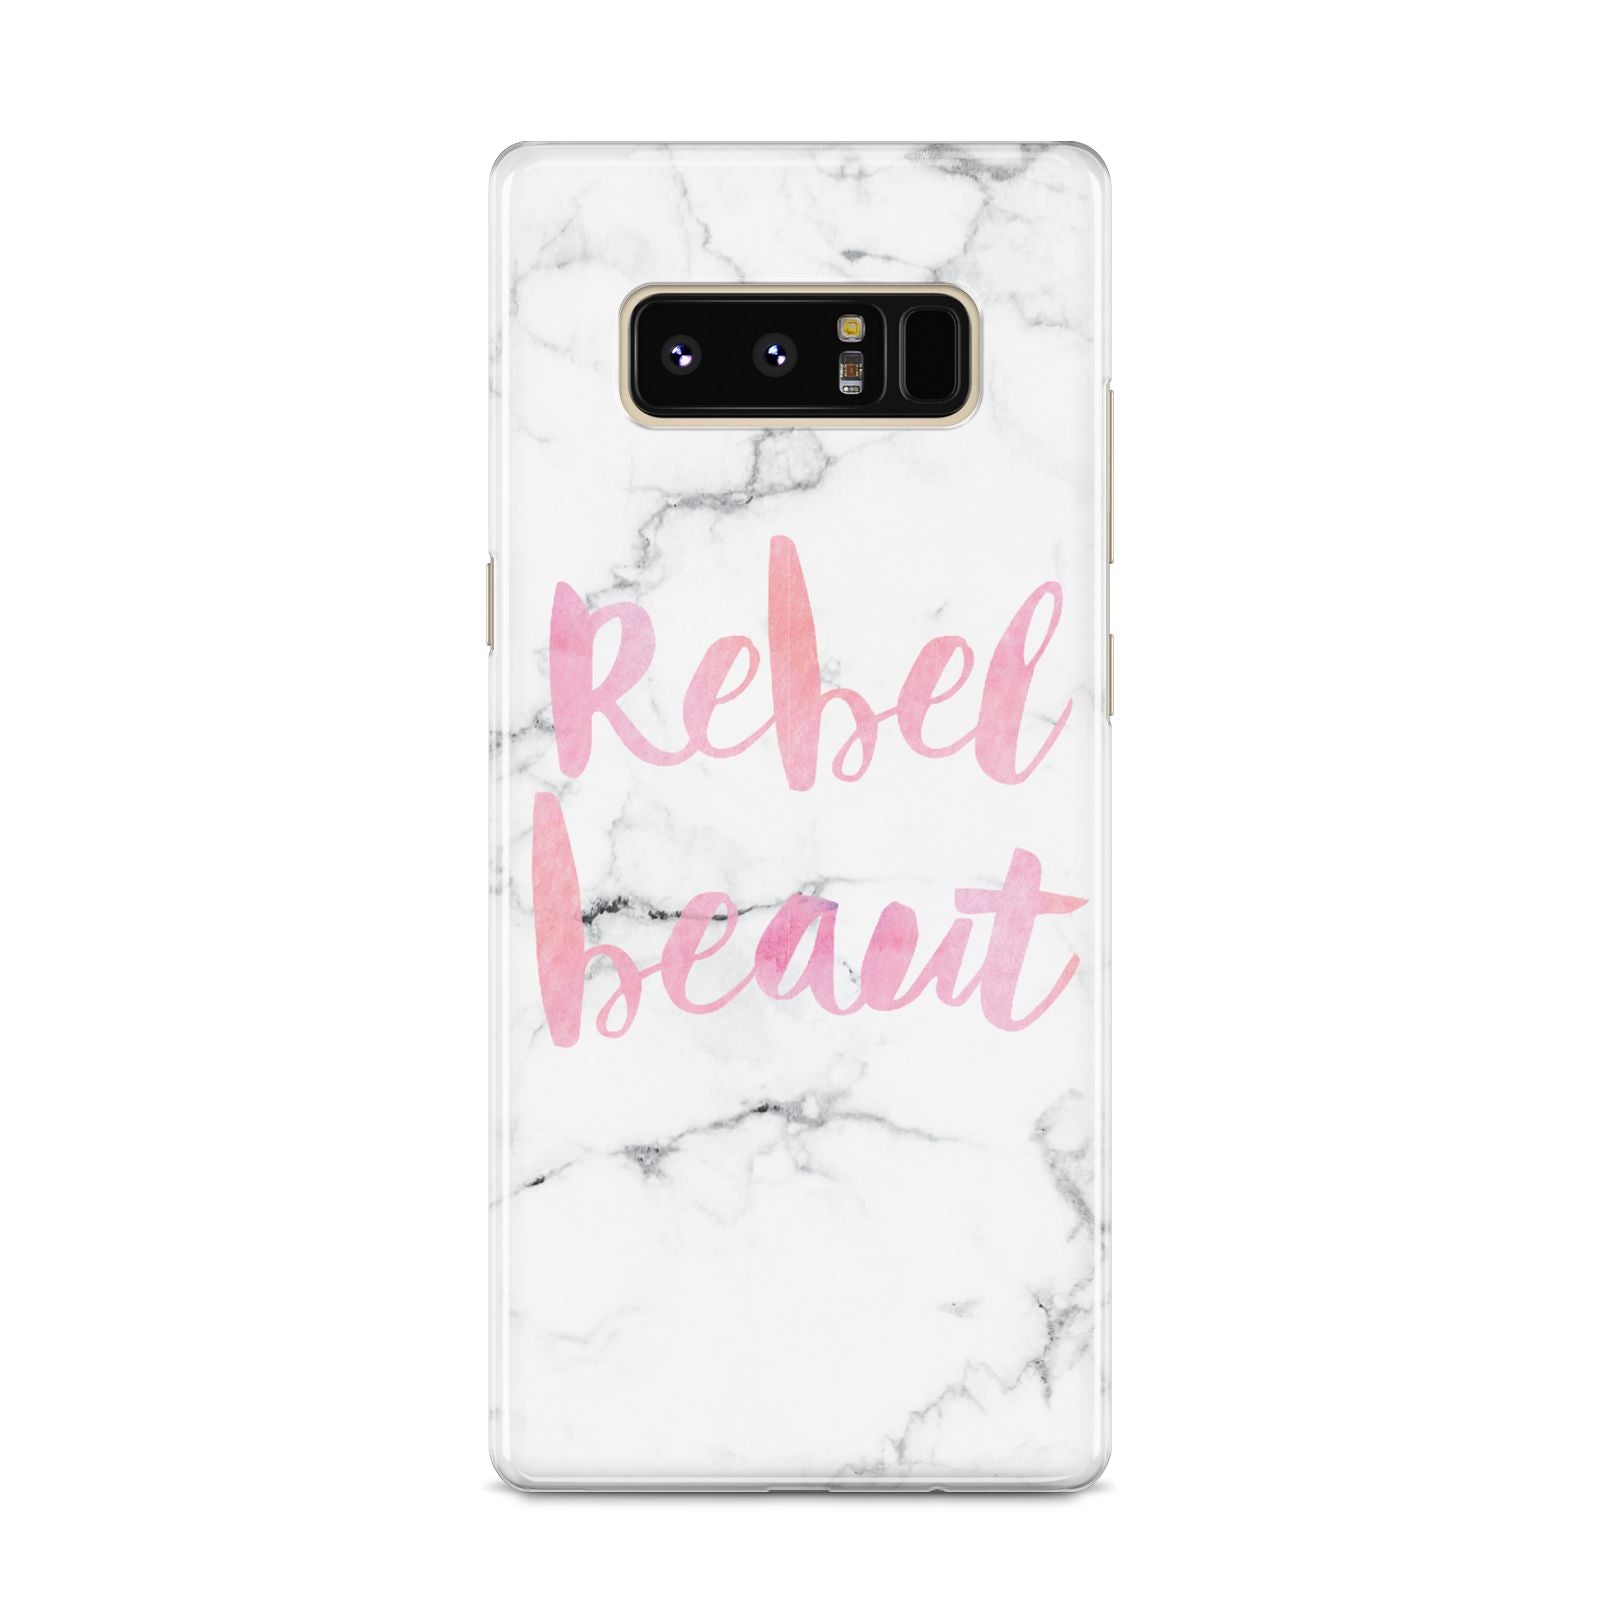 Rebel Heart Grey Marble Effect Samsung Galaxy S8 Case